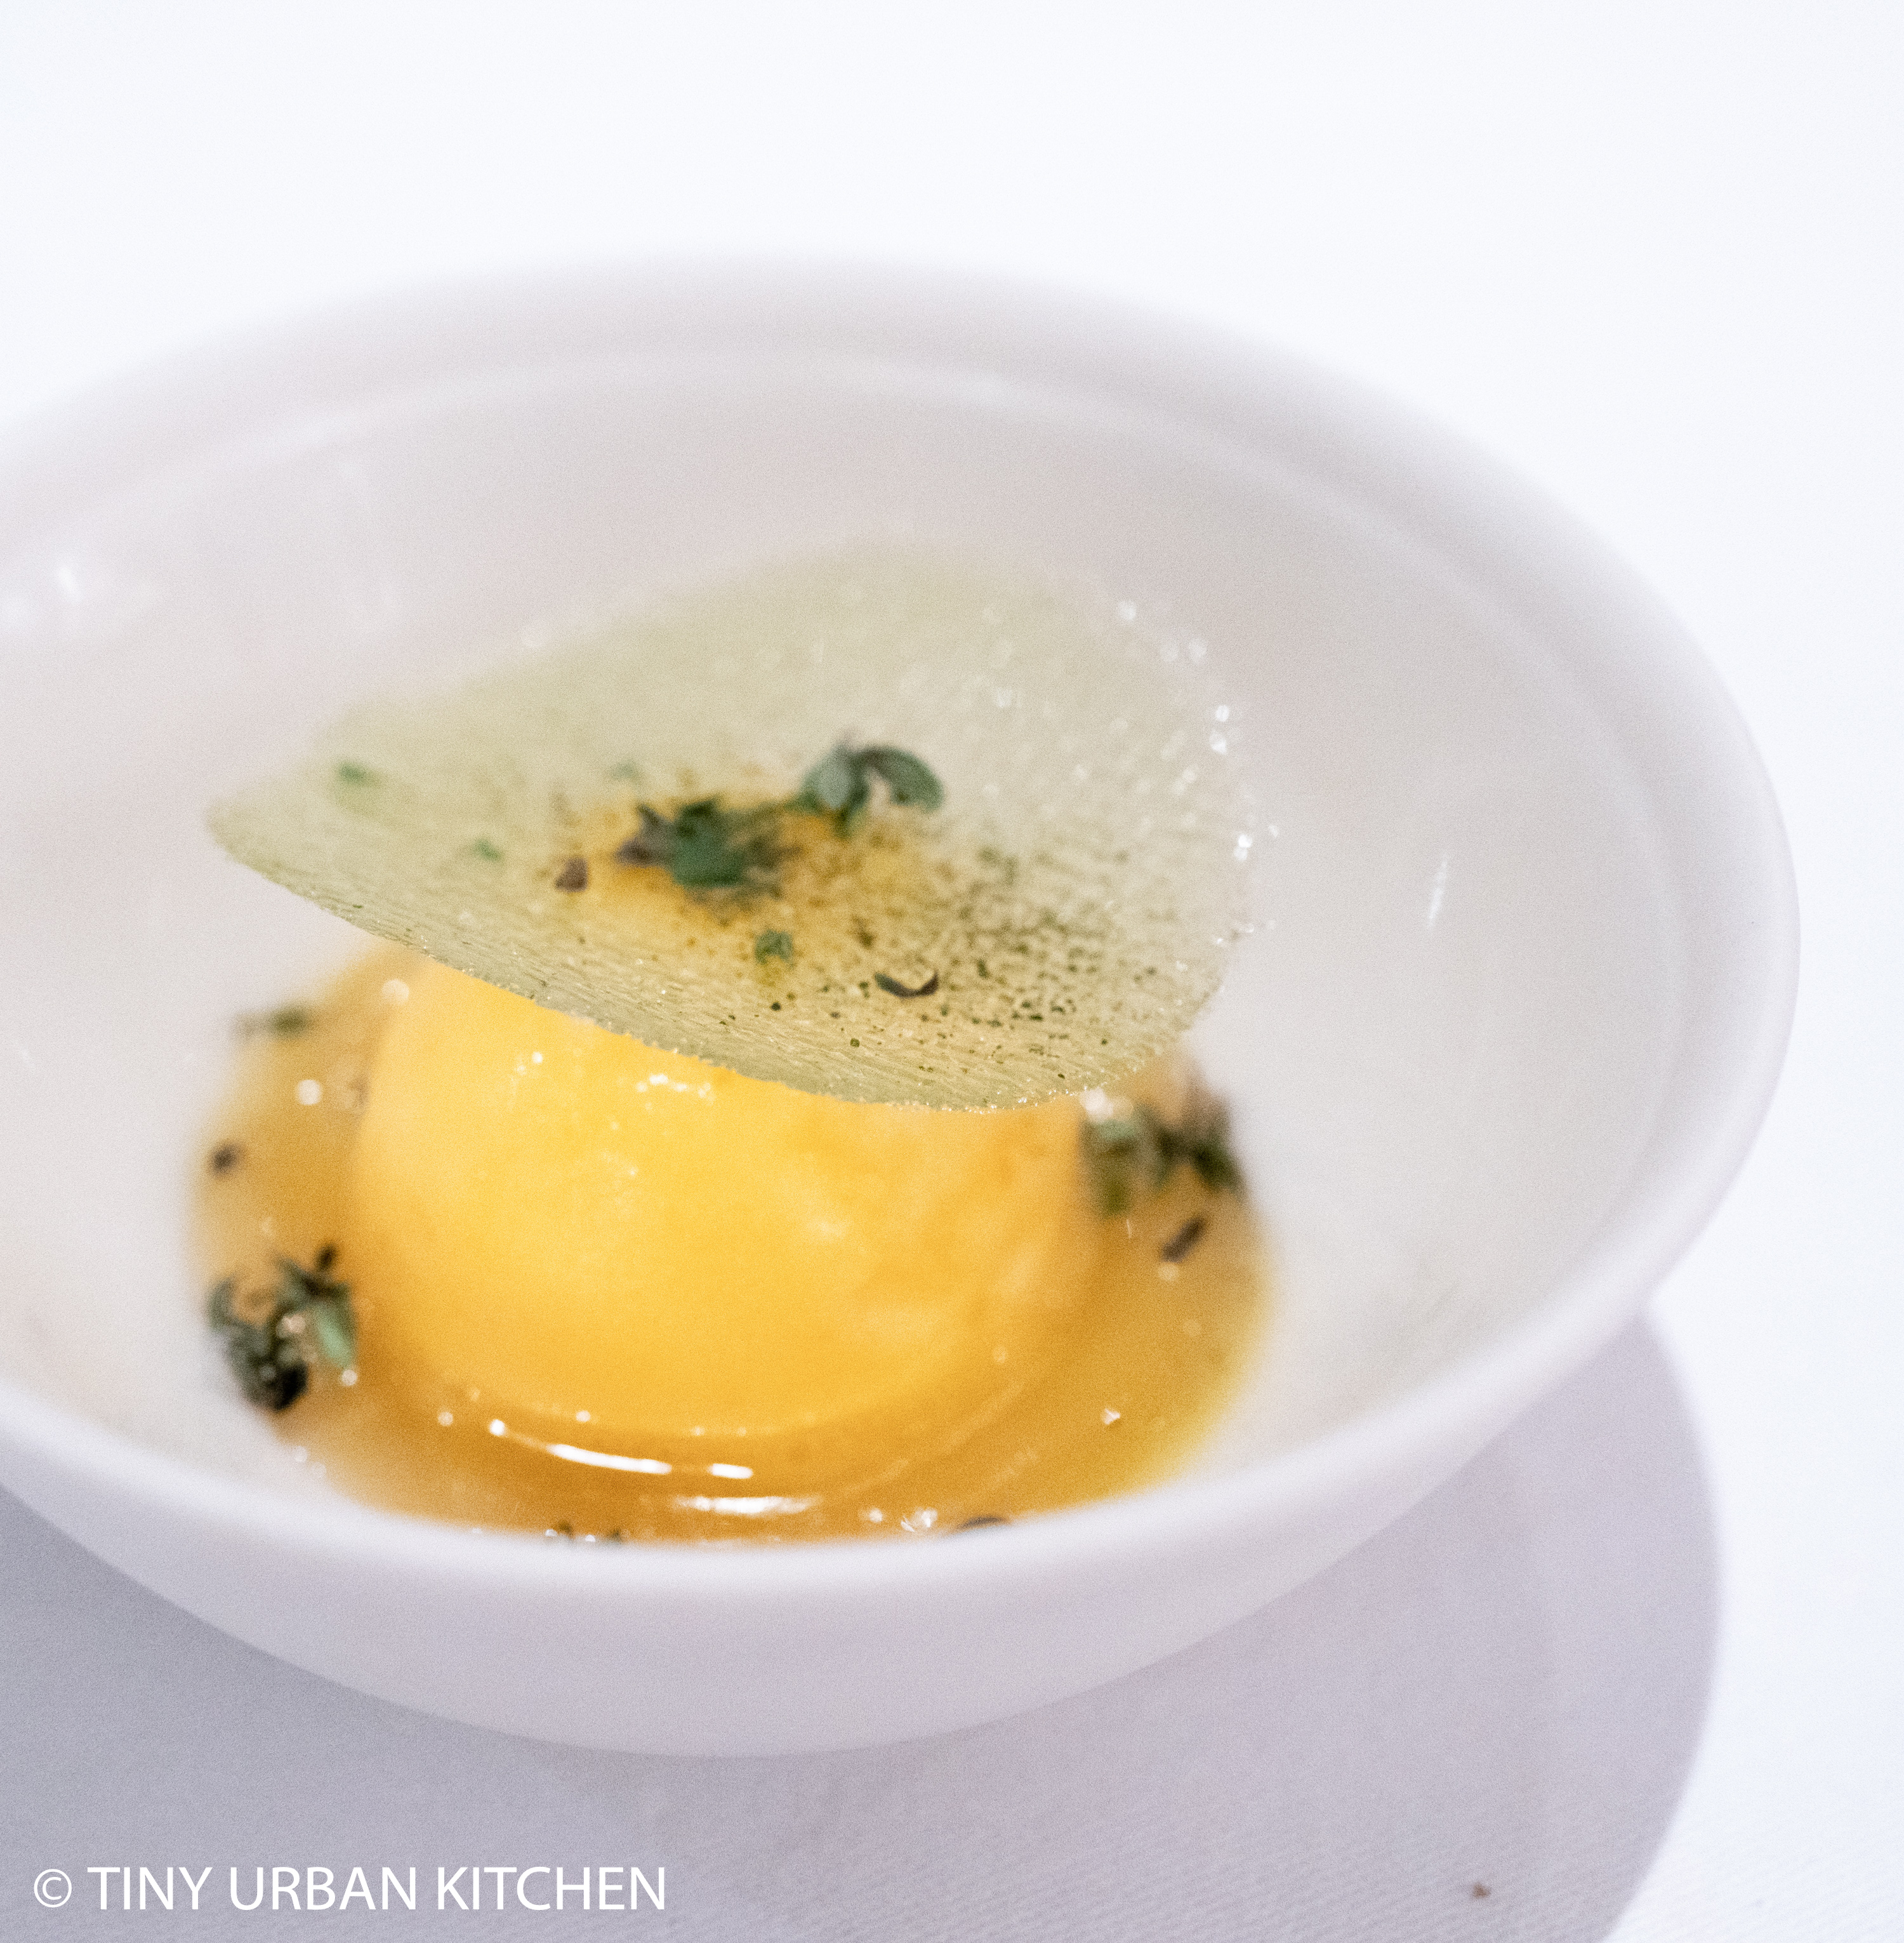 tea & lemon disc on top
sorbet